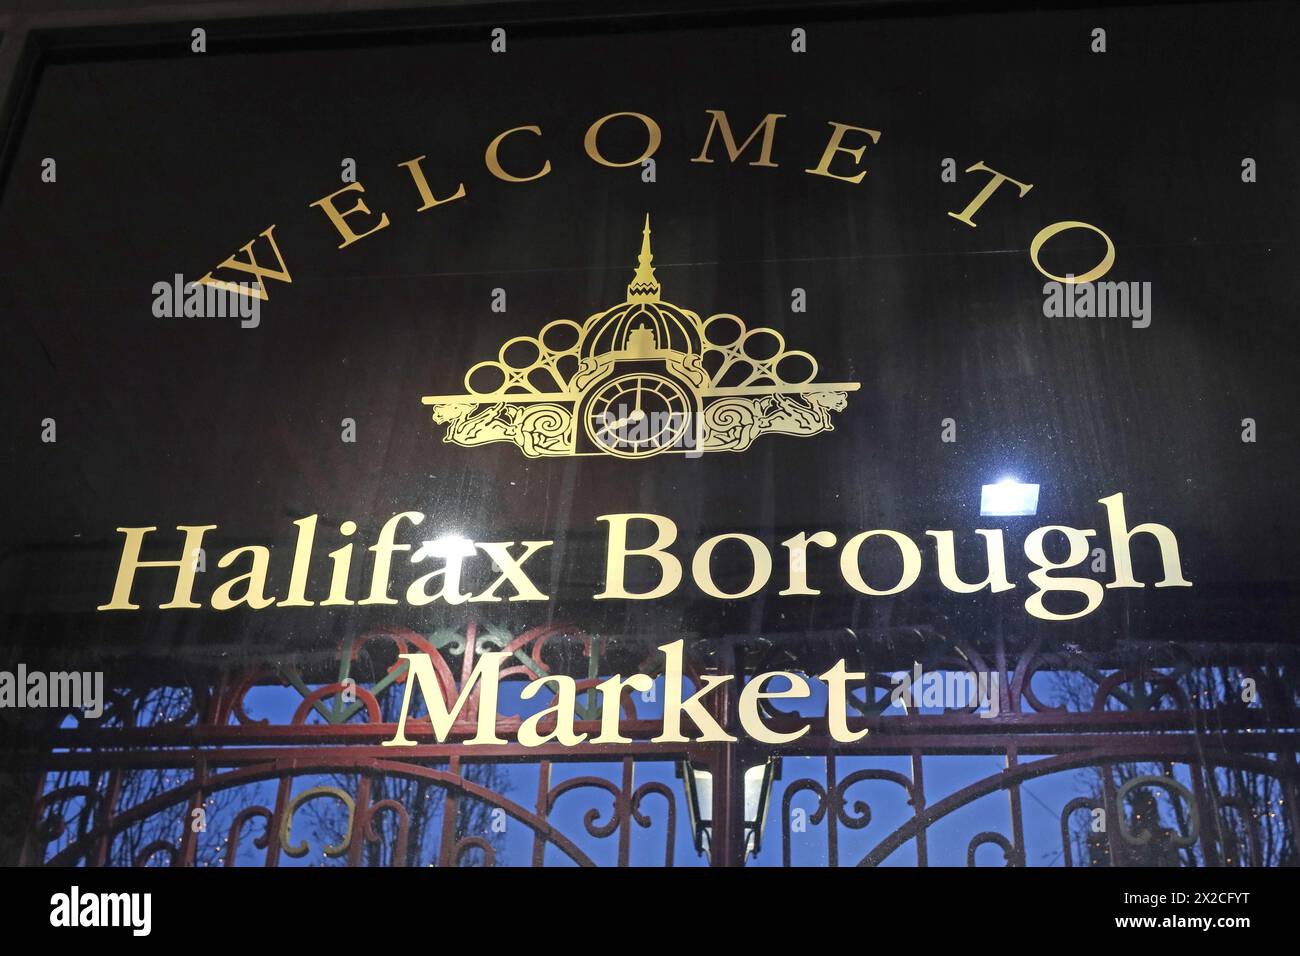 Doorway to Halifax Borough Market, 19 Albion St, West Yorkshire, England, HX1 1DU Stock Photo